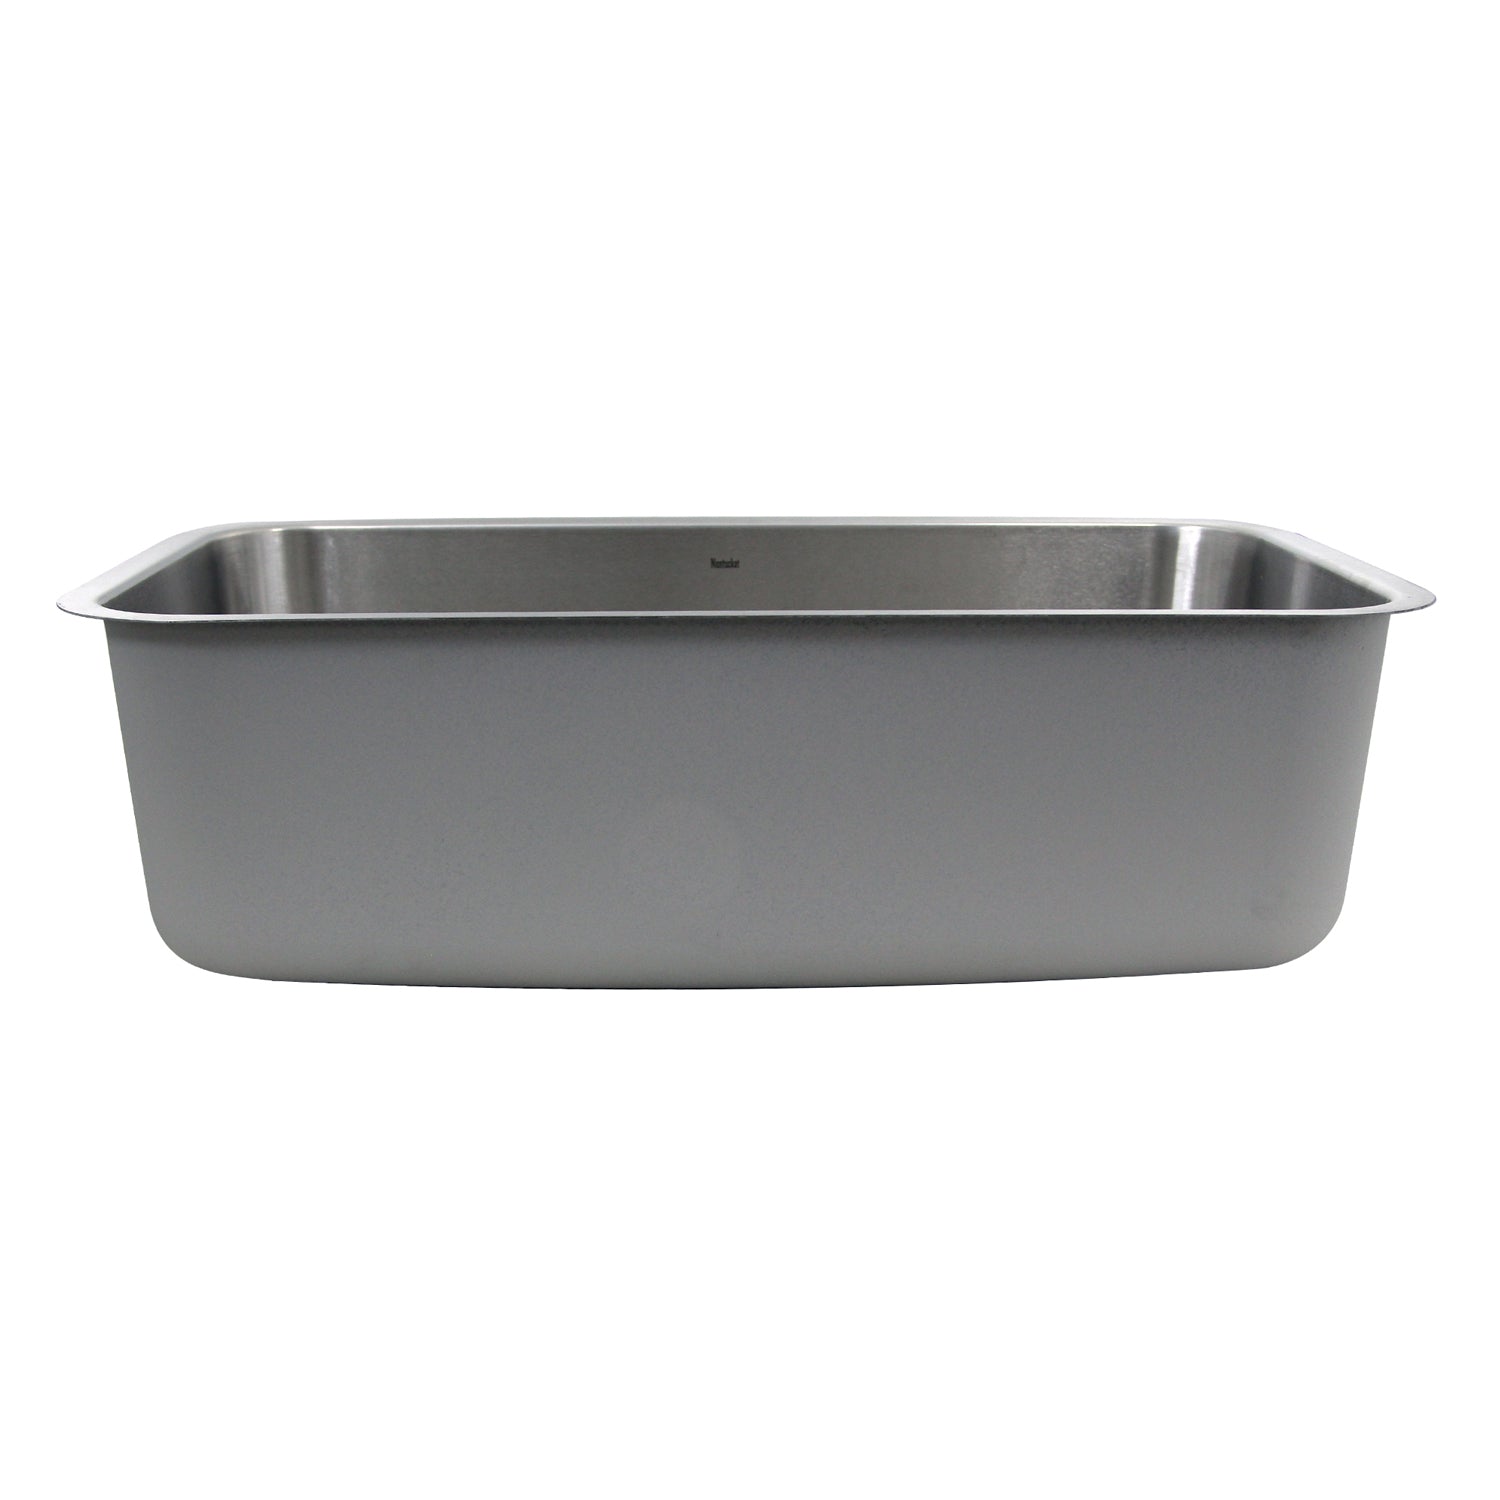 Nantucket Sinks NS3018-9-16 30" Large Rectangle Single Bowl Undermount Stainless Steel Kitchen Sink, 9" Deep